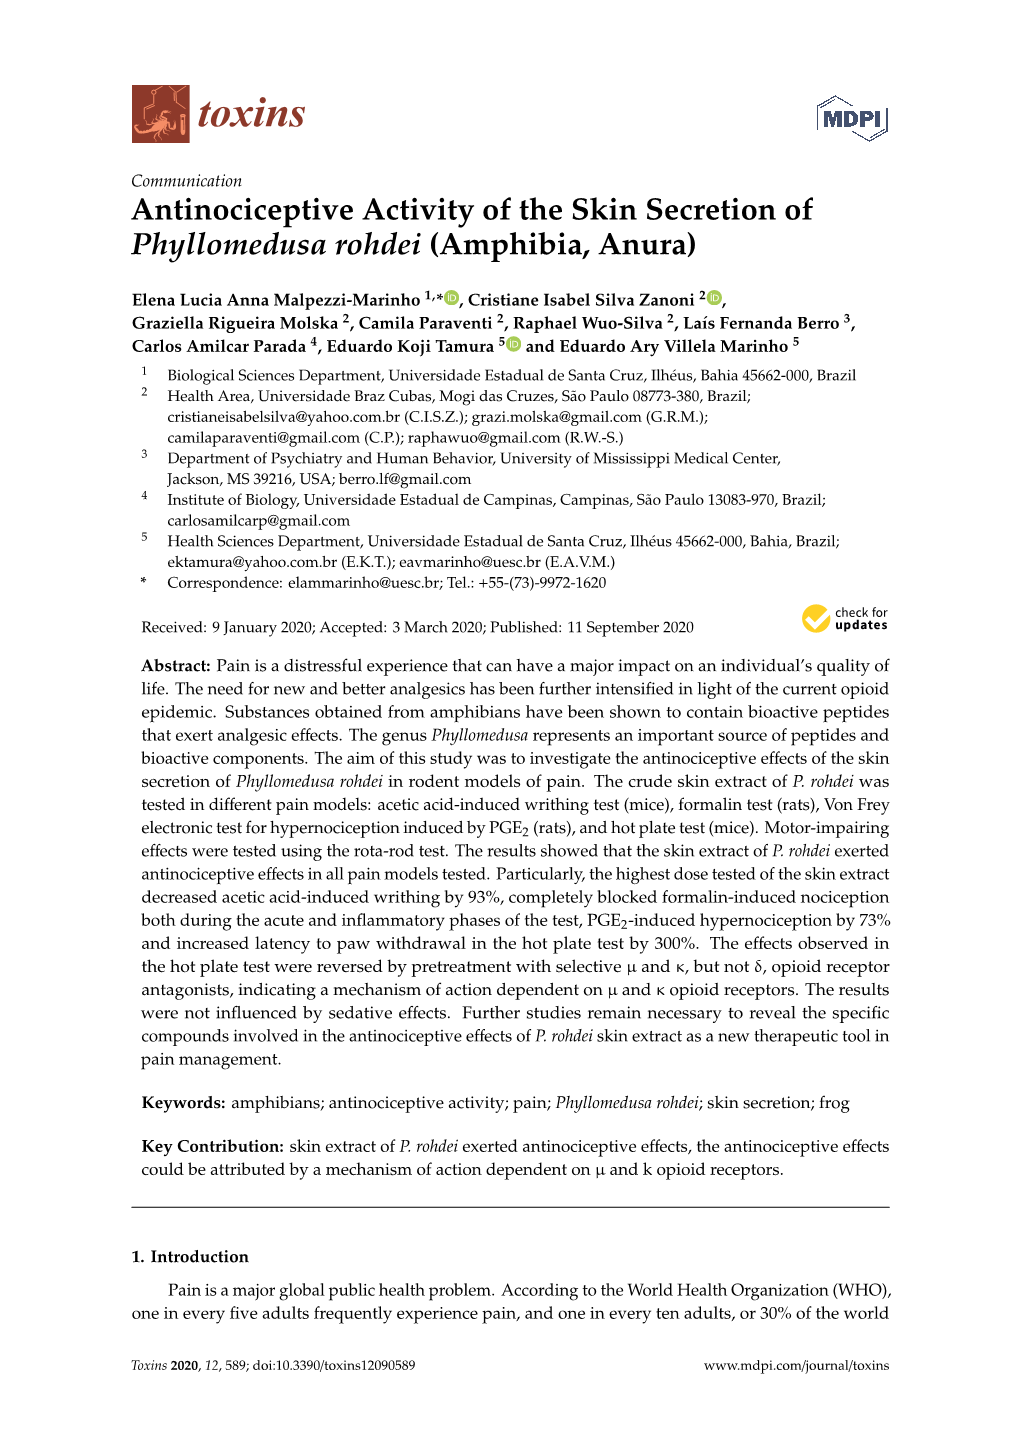 Antinociceptive Activity of the Skin Secretion of Phyllomedusa Rohdei (Amphibia, Anura)